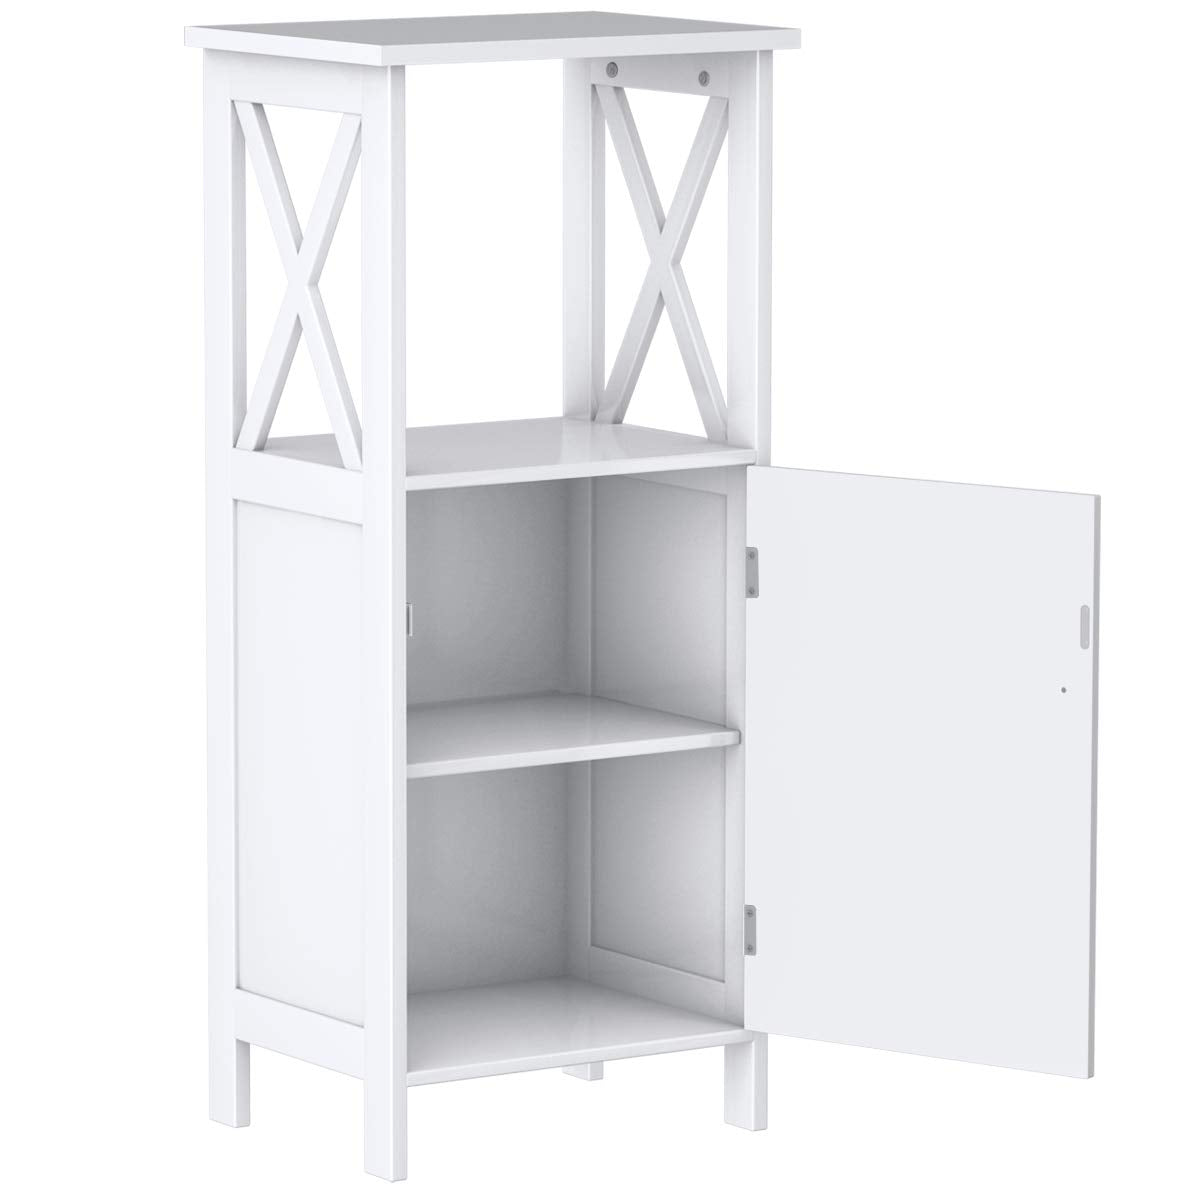 Giantex Floor Storage Cabinet Freestanding W/One Door Cabinet & Adjustable Shelf Bathroom Storage Organizer Cabinet,White